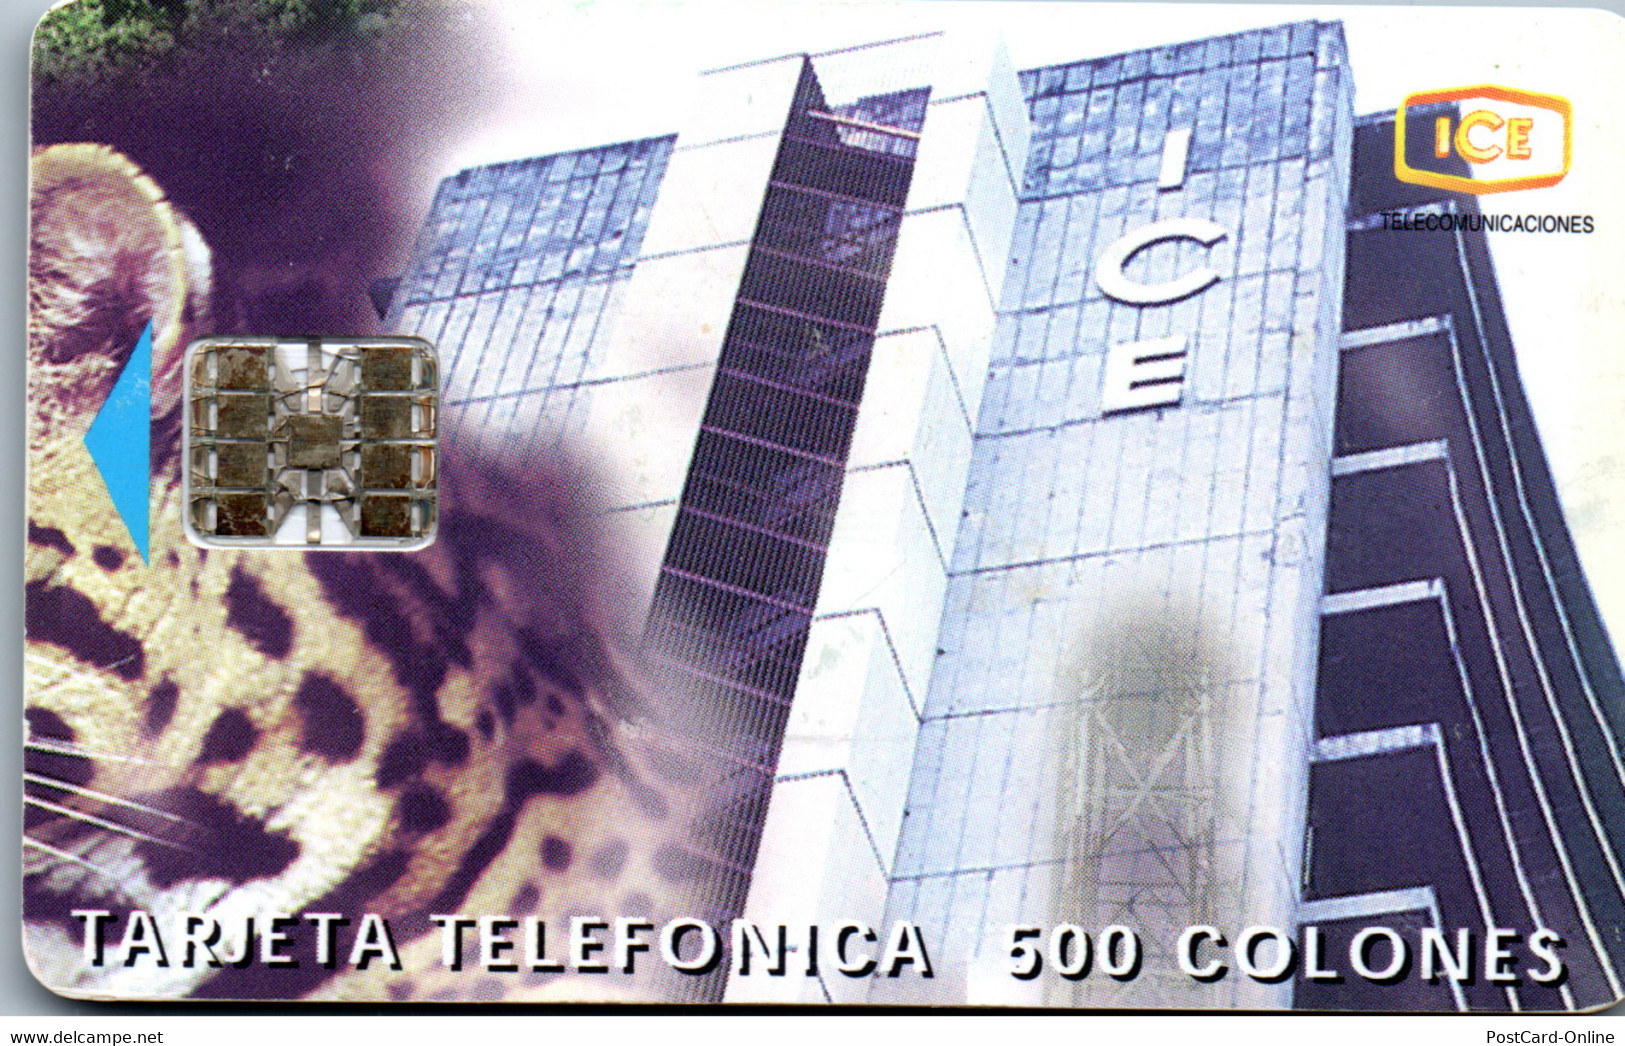 19141 - Costa Rica - ICE , Tarjeta Telefonica - Costa Rica